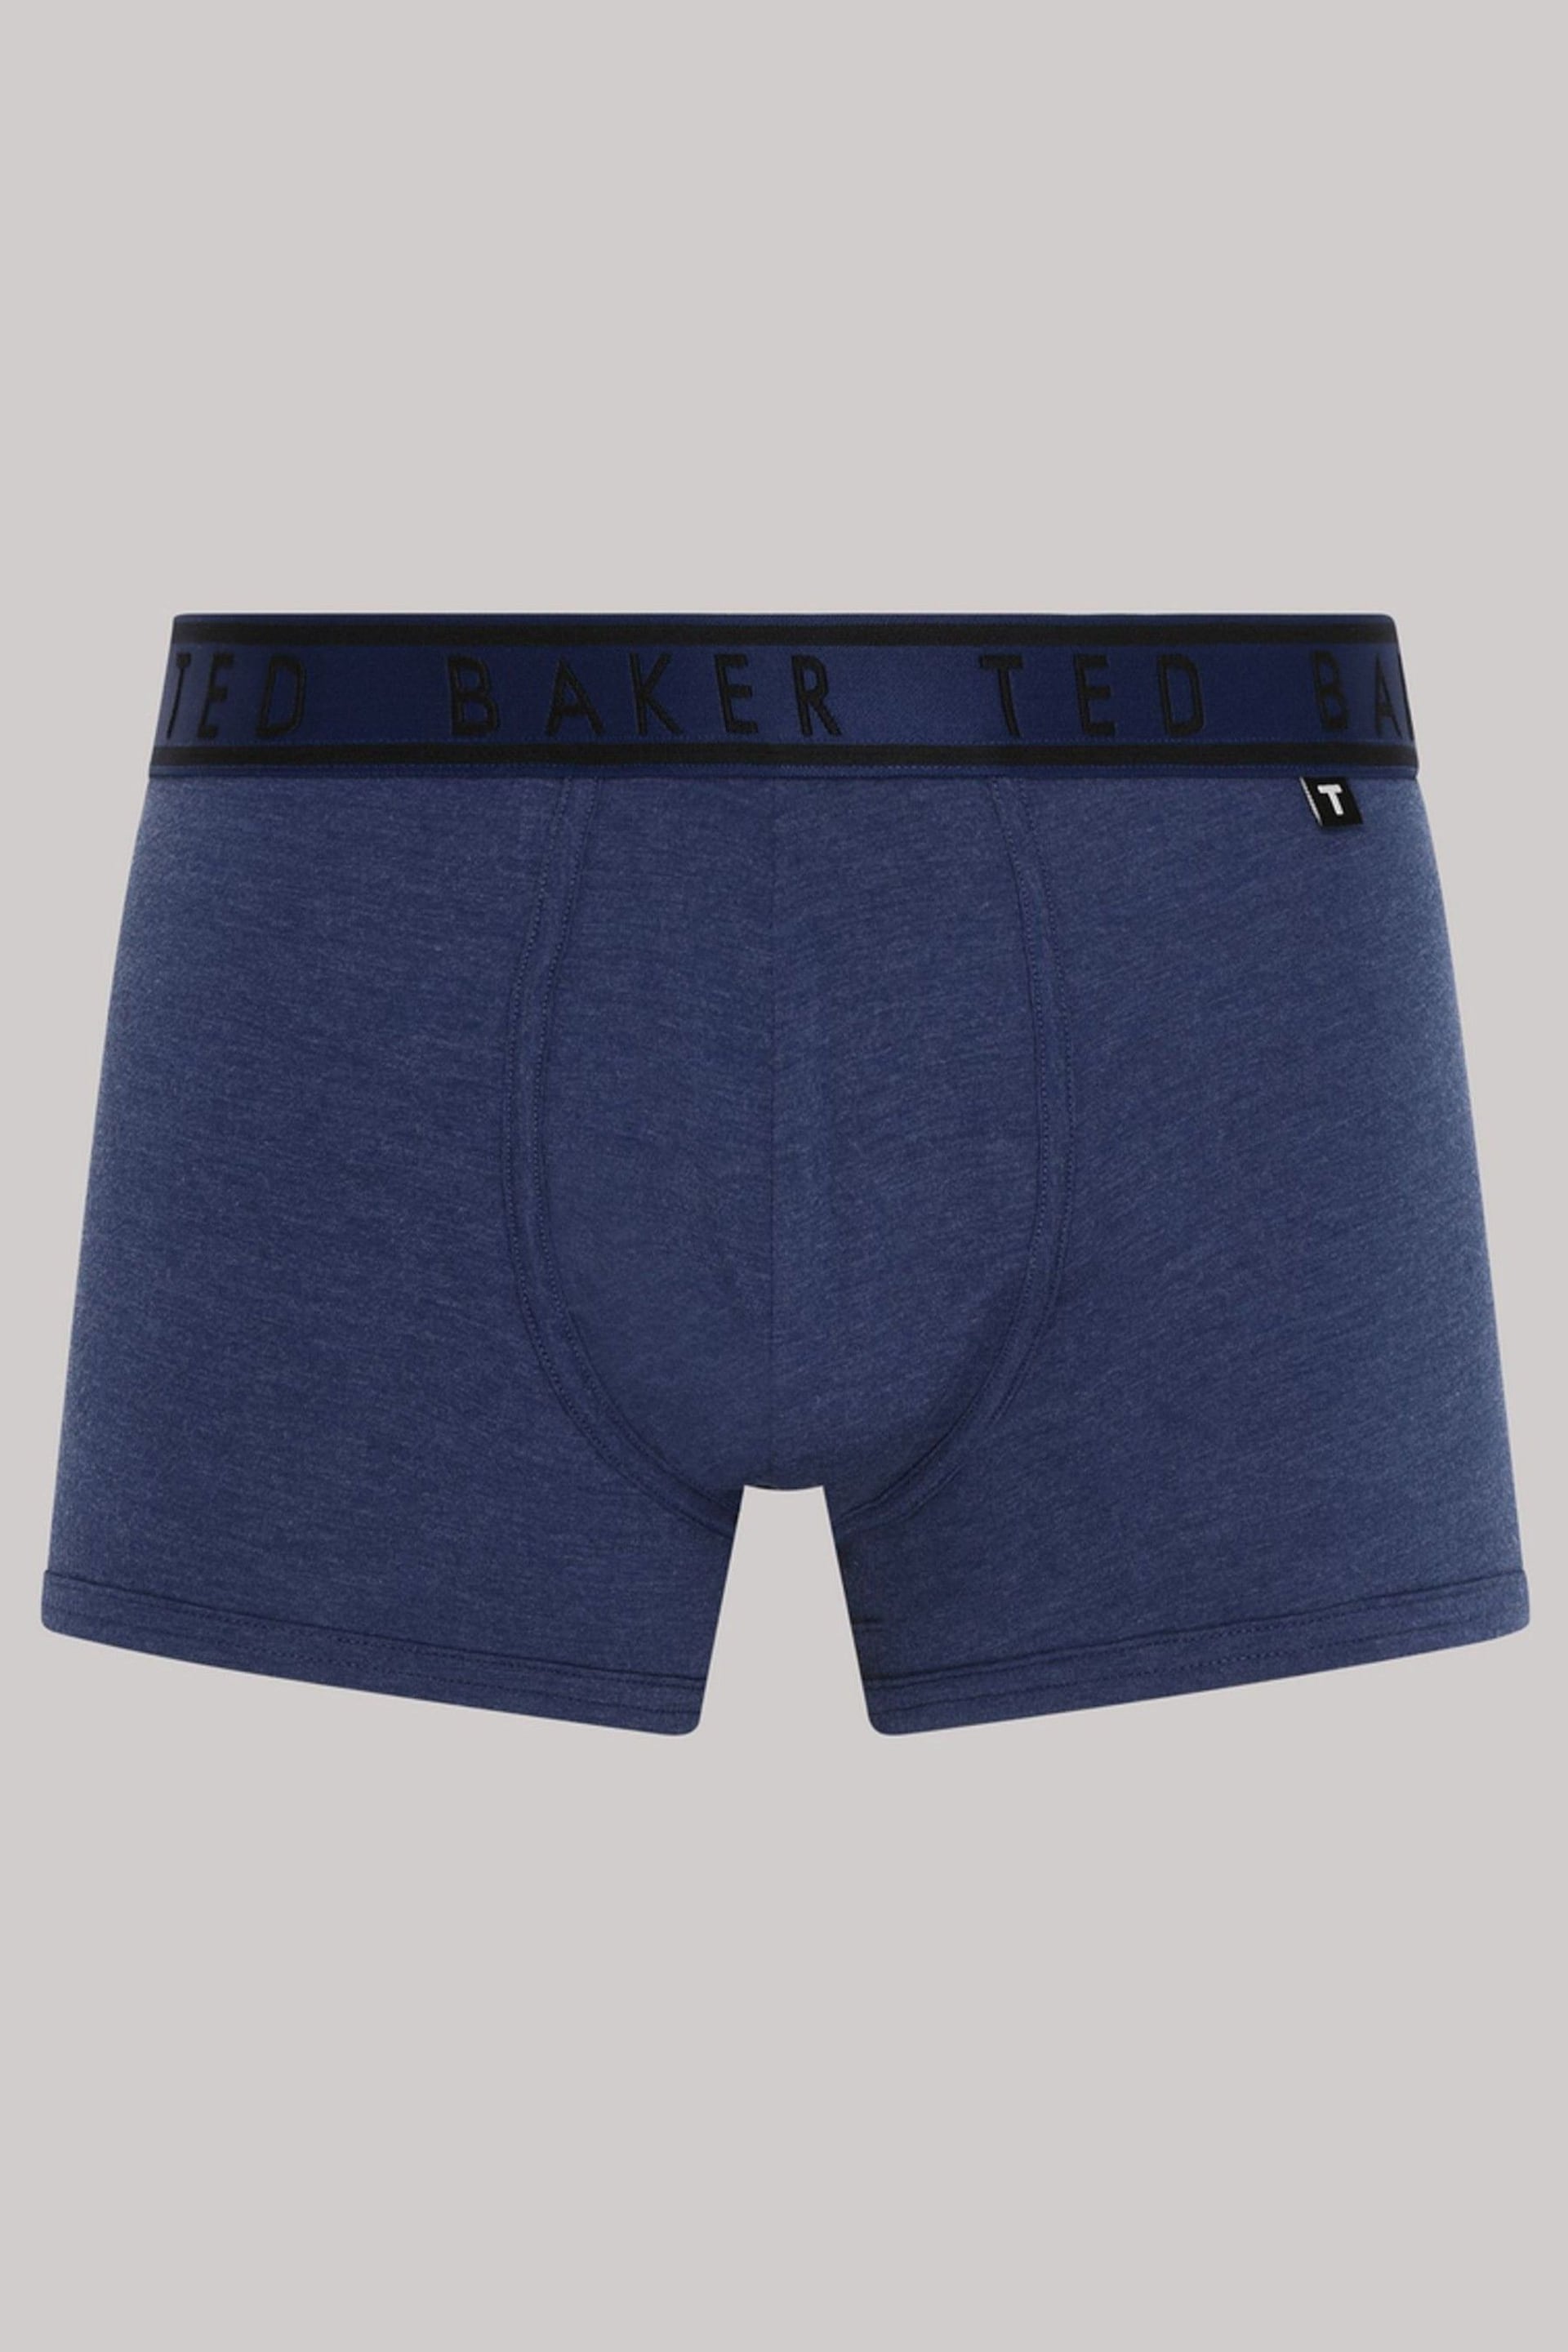 Ted Baker Dark Blue Cotton Trunks 3 Pack - Image 7 of 7